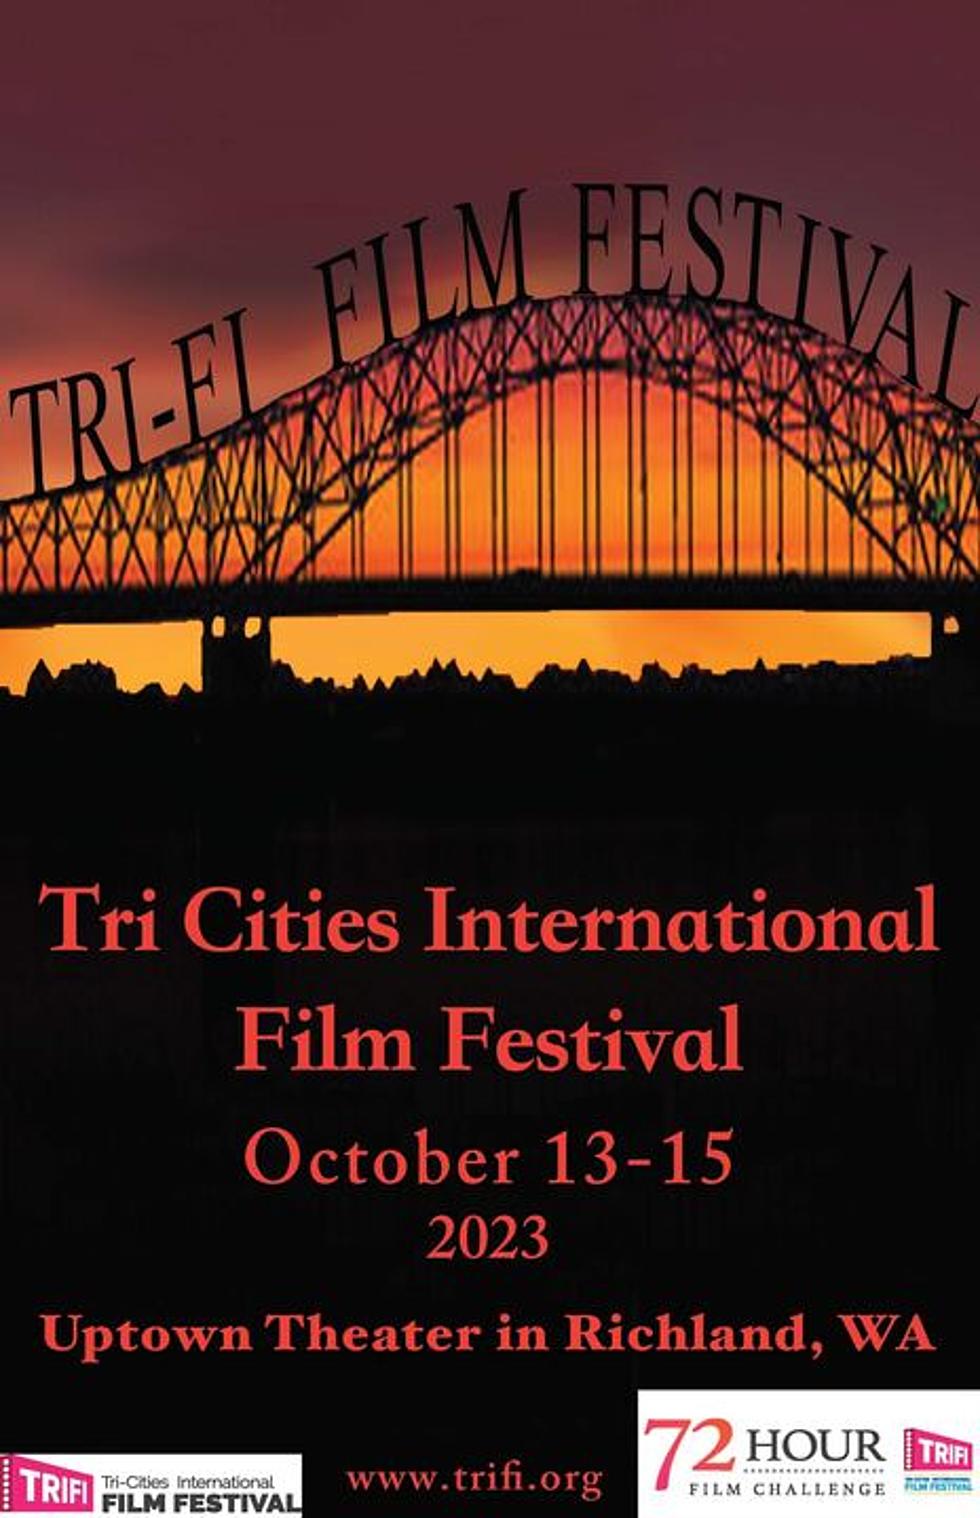 TRIFI INTERNATIONAL FILM FESTIVAL SHOWINGS AND TICKET INFO